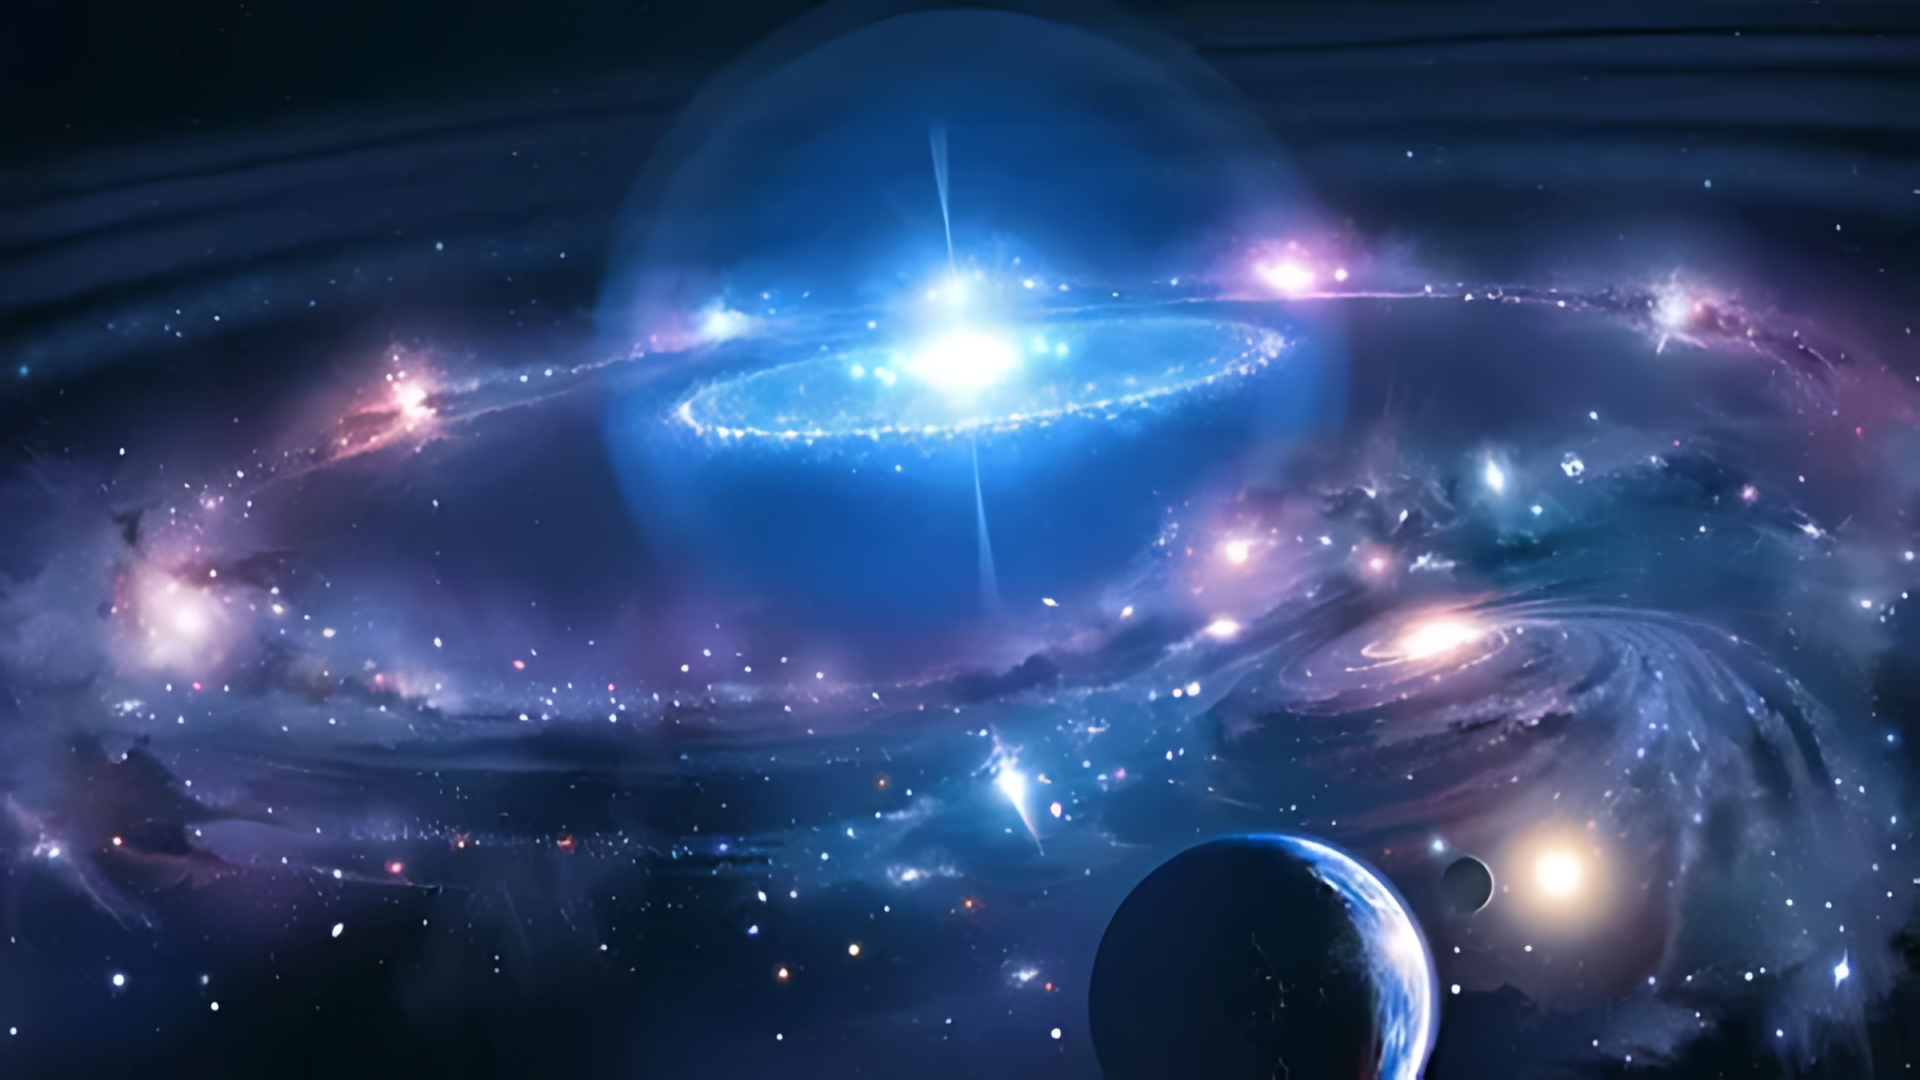 Oblivion - Mysterious Universe (Space Music Fest Edit) 2015 (Ultra HD 4K)